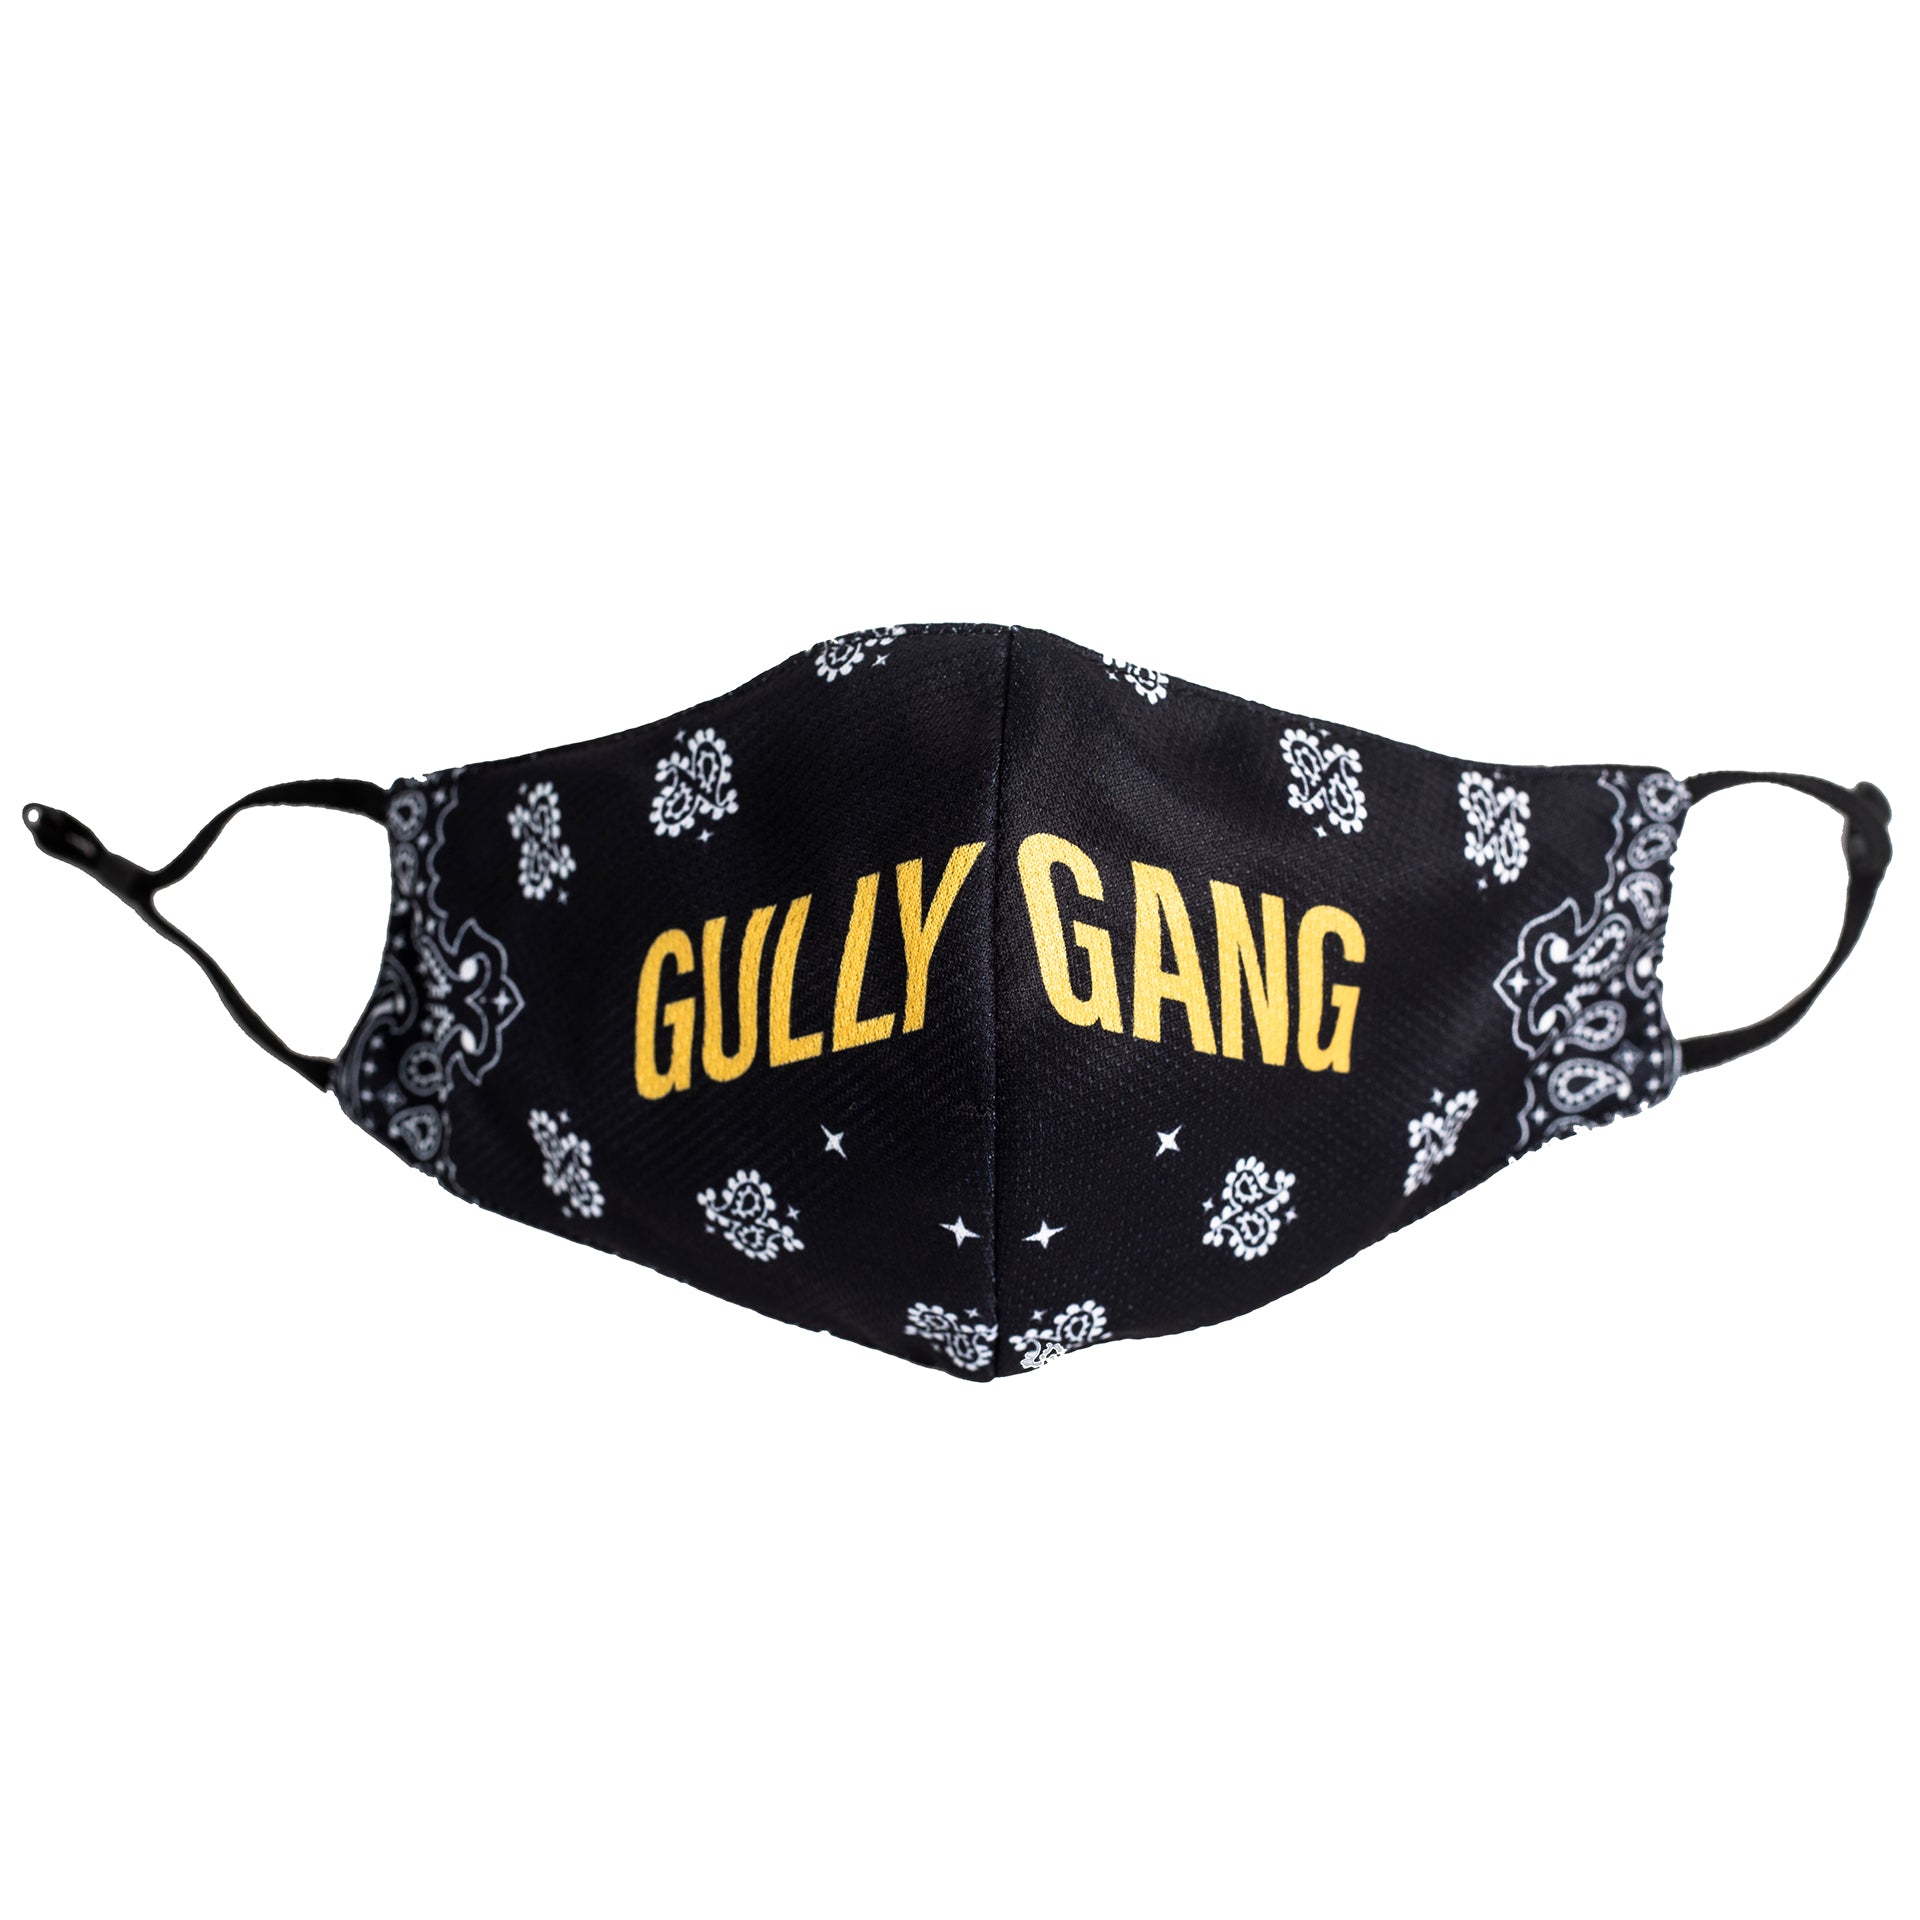 Classic Gully Gang Mask